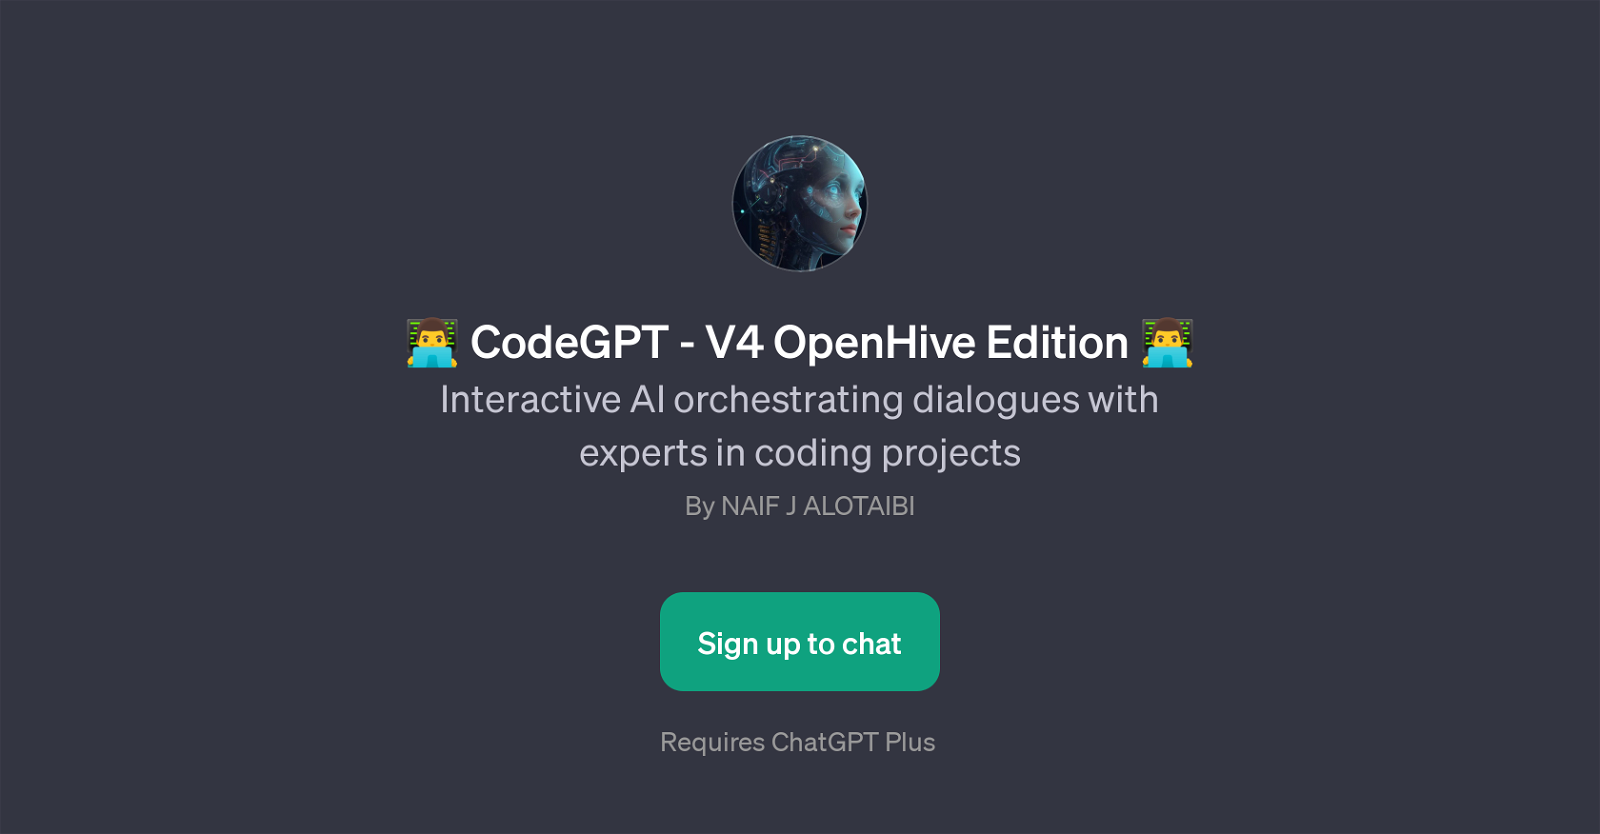 CodeGPT - V4 OpenHive Edition website